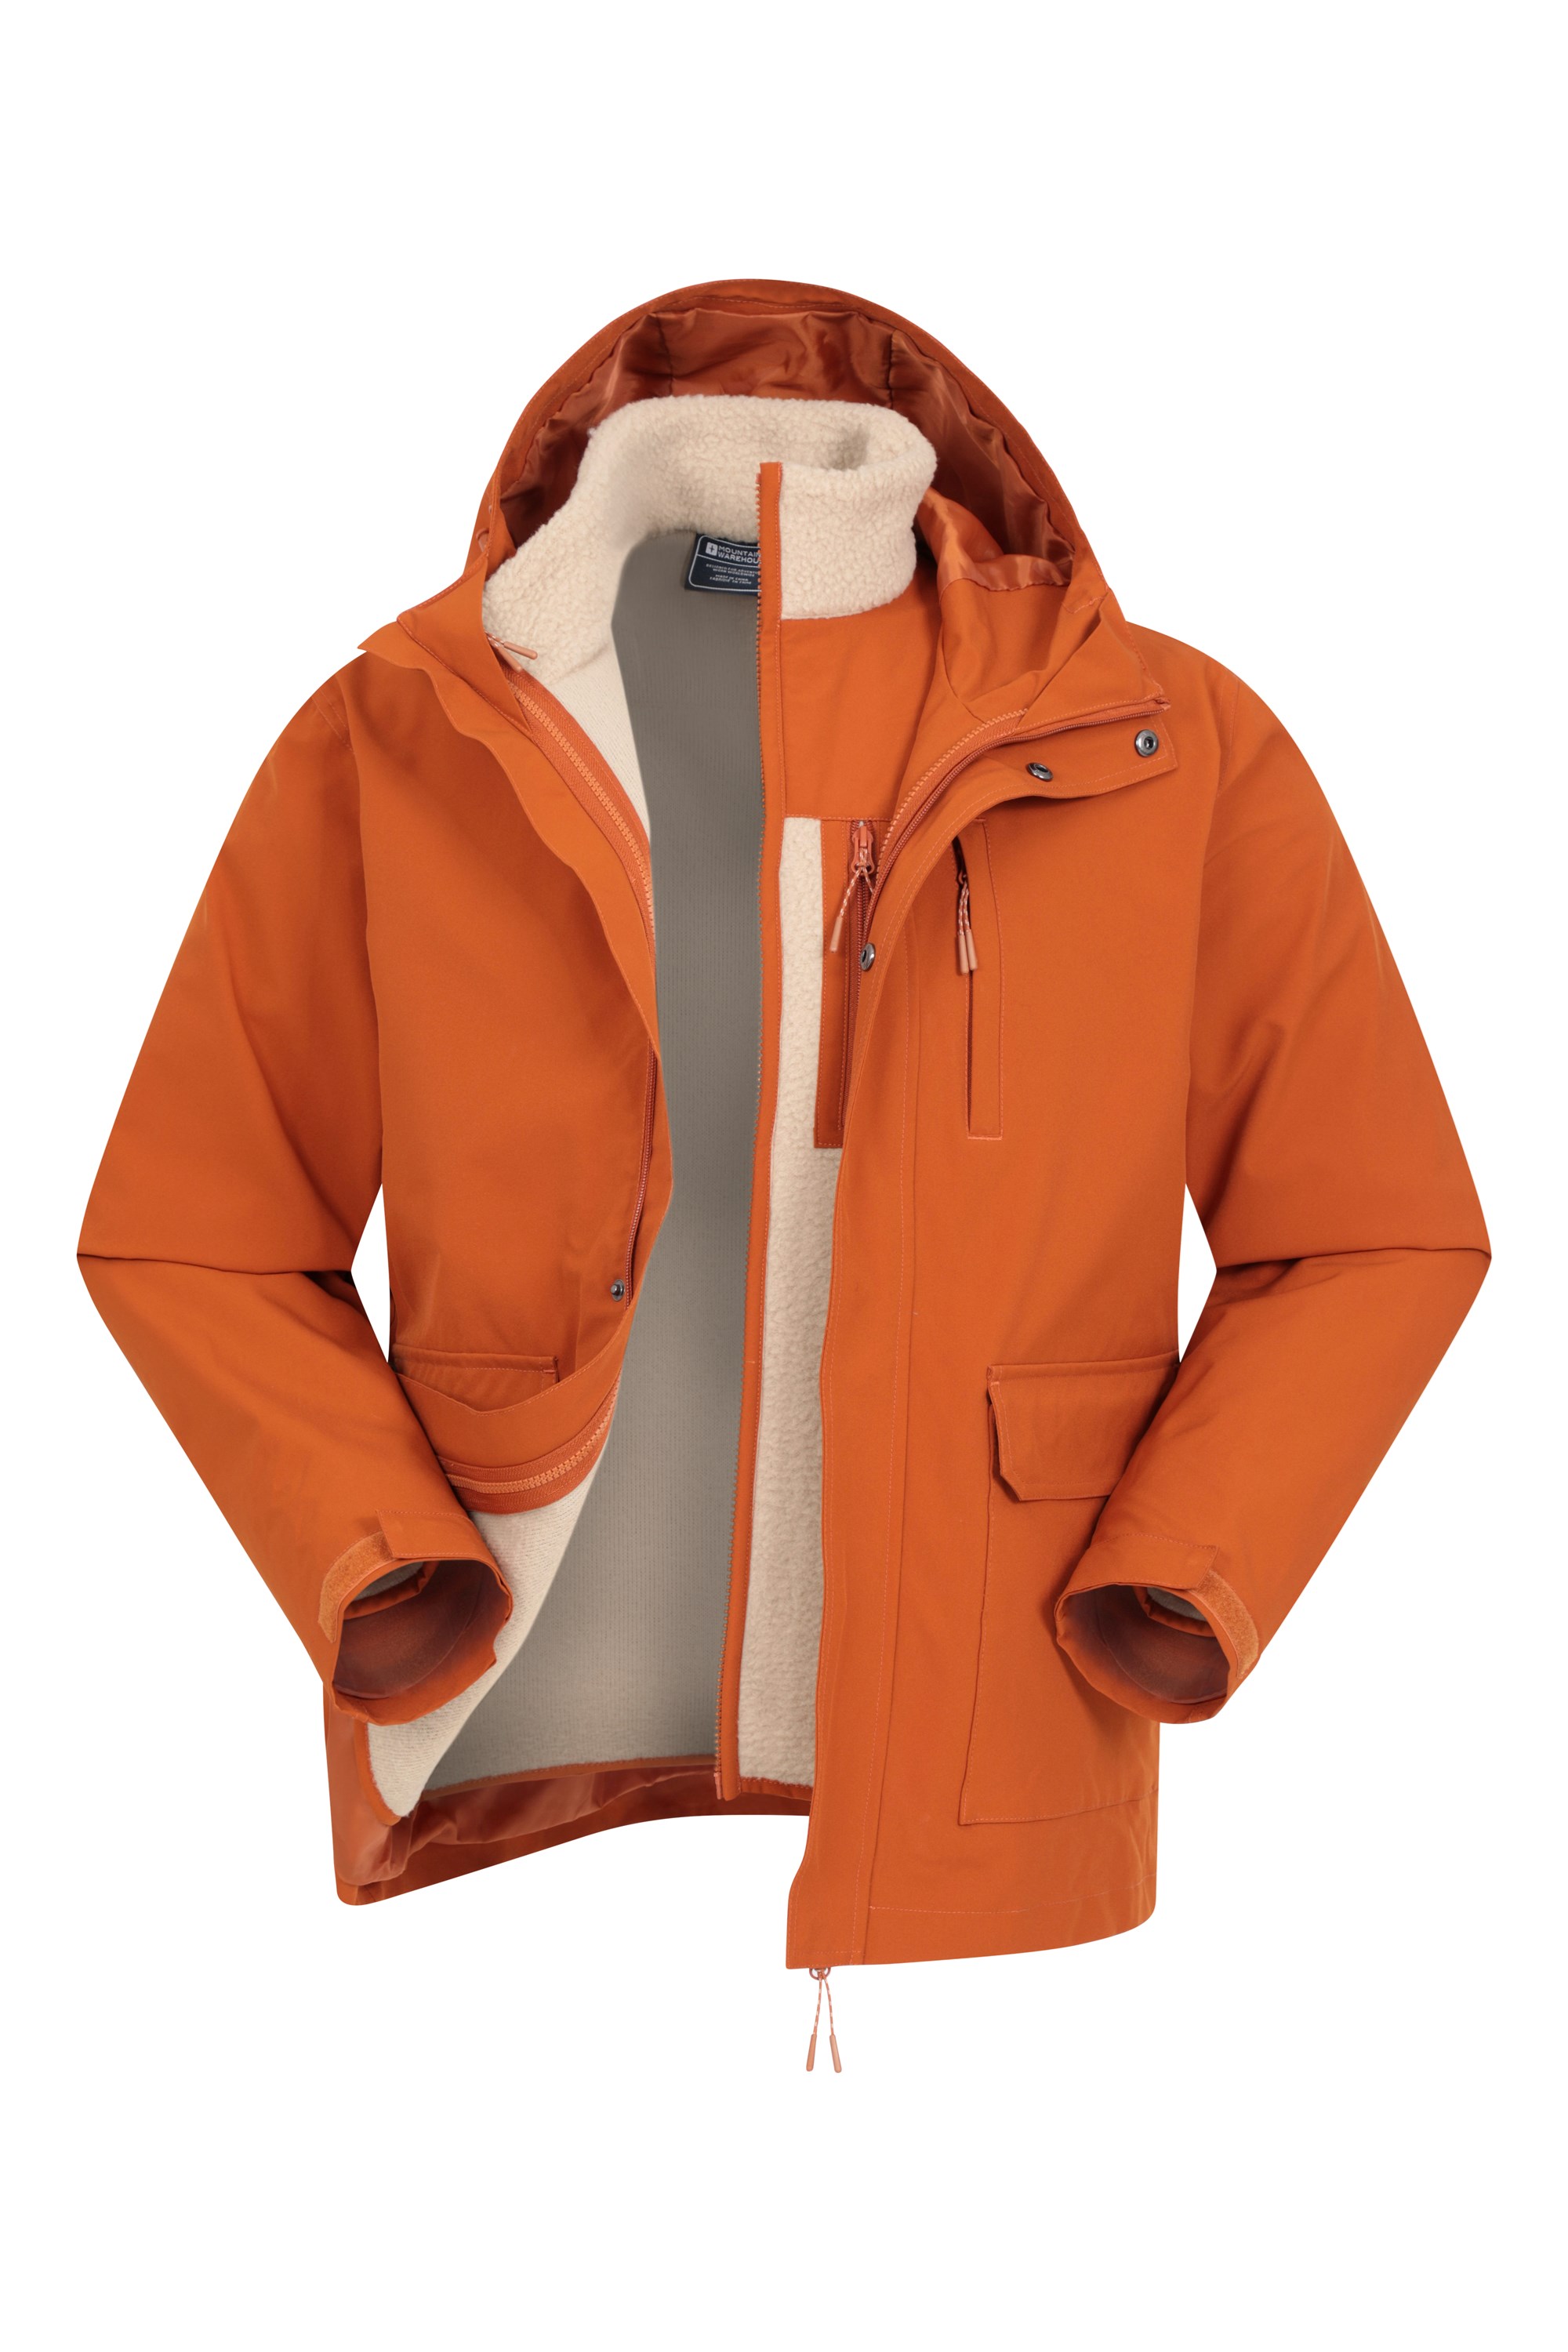 Mountain Warehouse Headland Mens 3 in 1 Jacket Waterproof Breathable